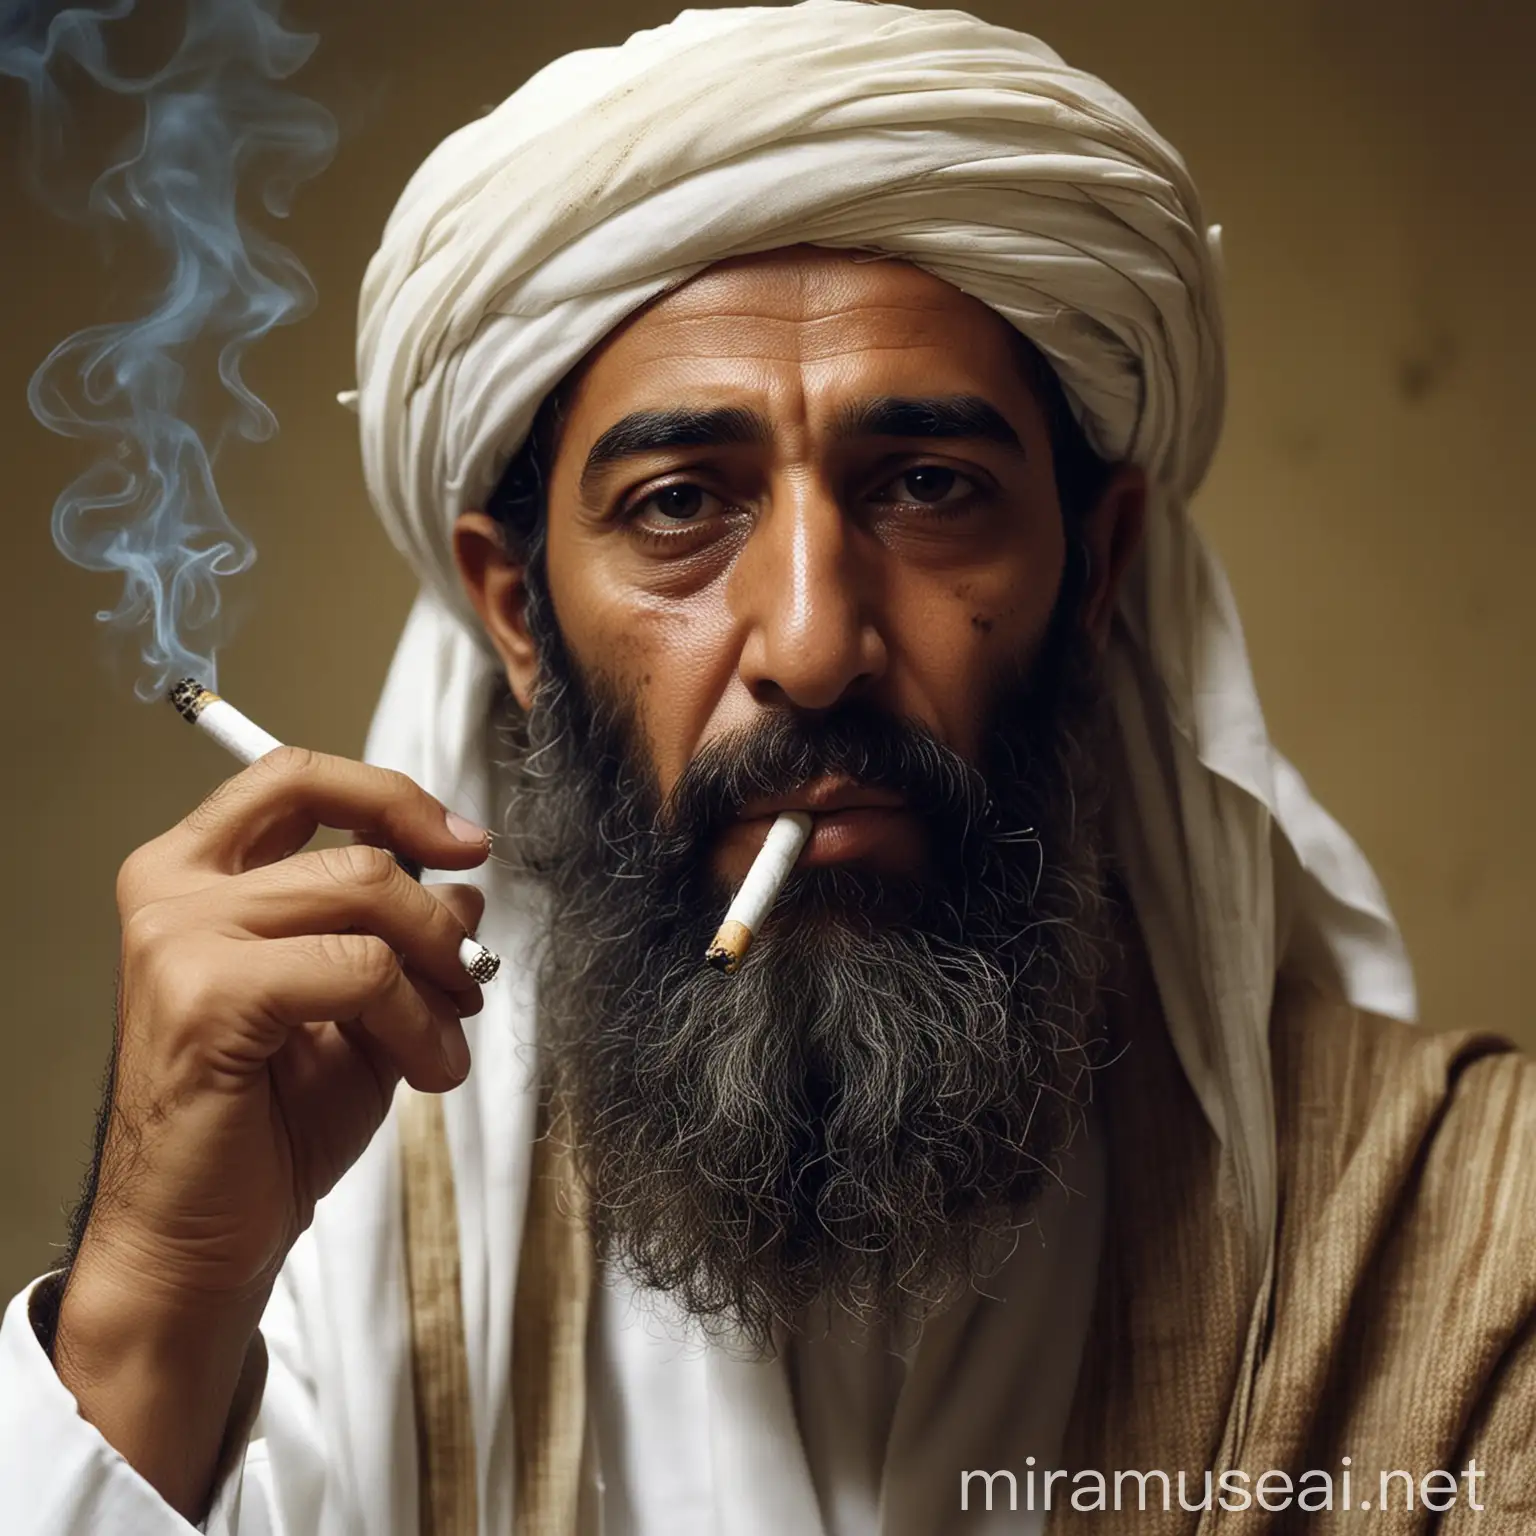 Osama bin Laden Smoking a Cigarette in Shadowy Solitude